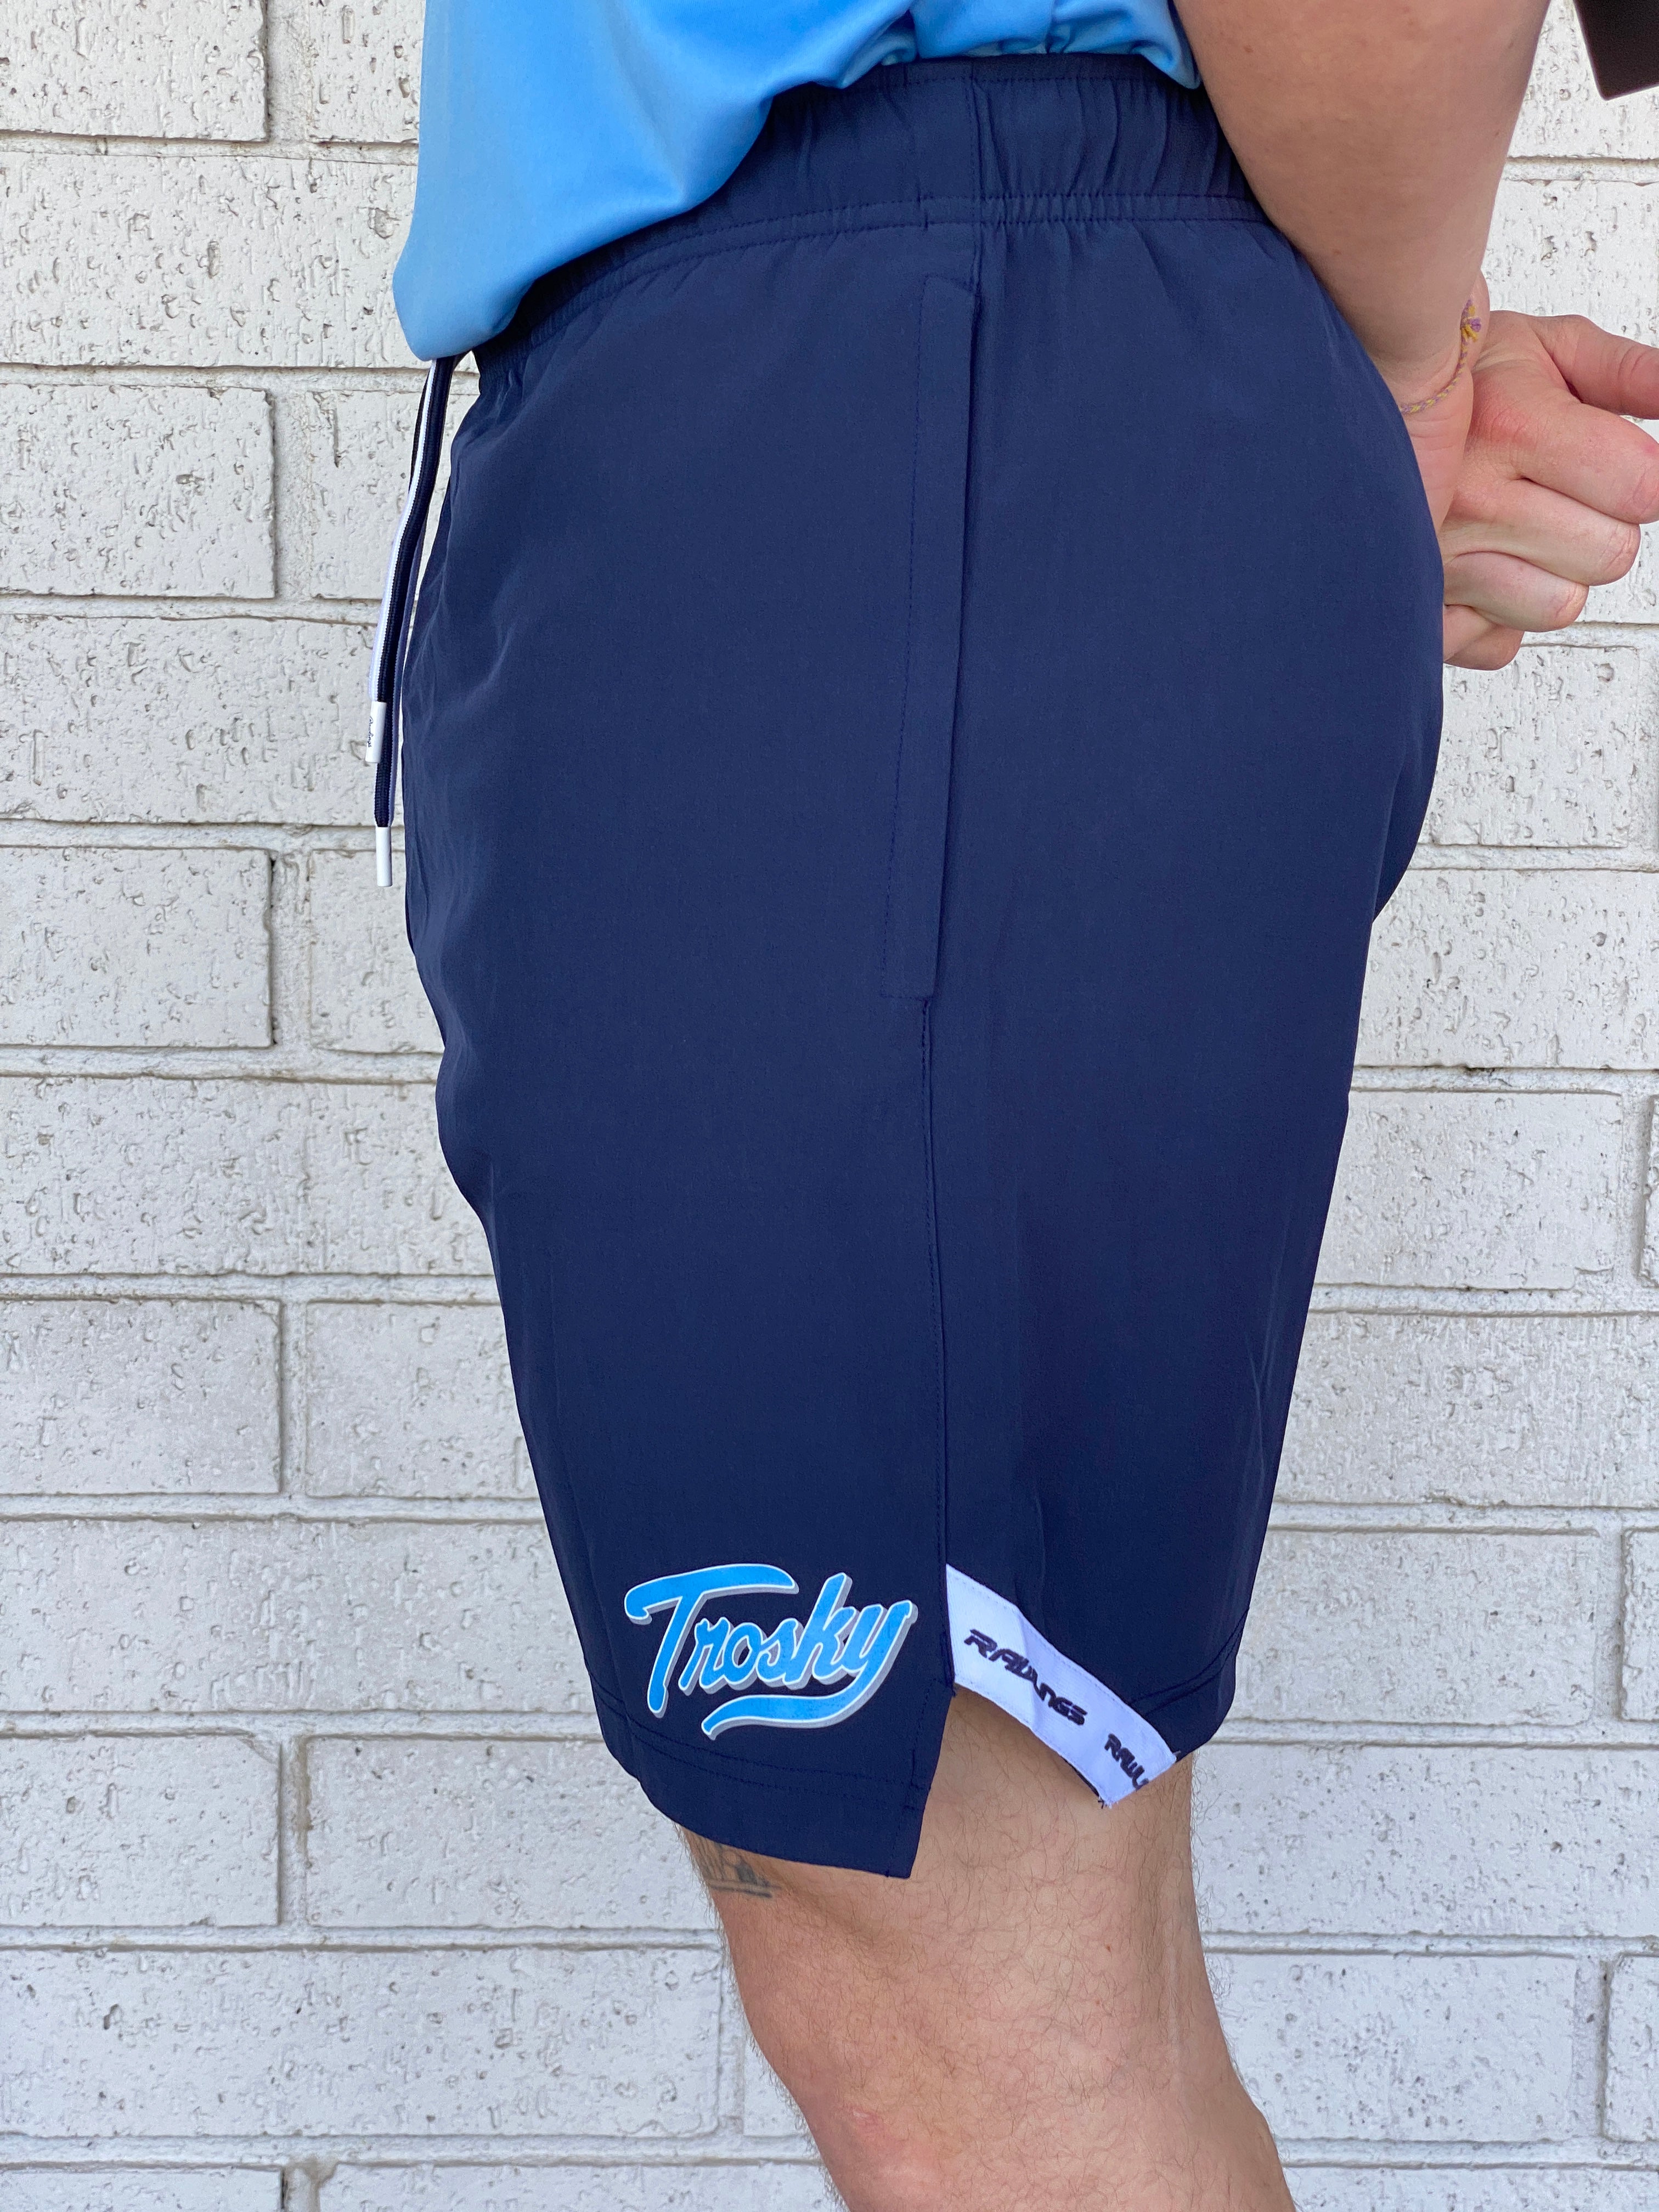 Rawlings Trosky Shorts - Navy XL